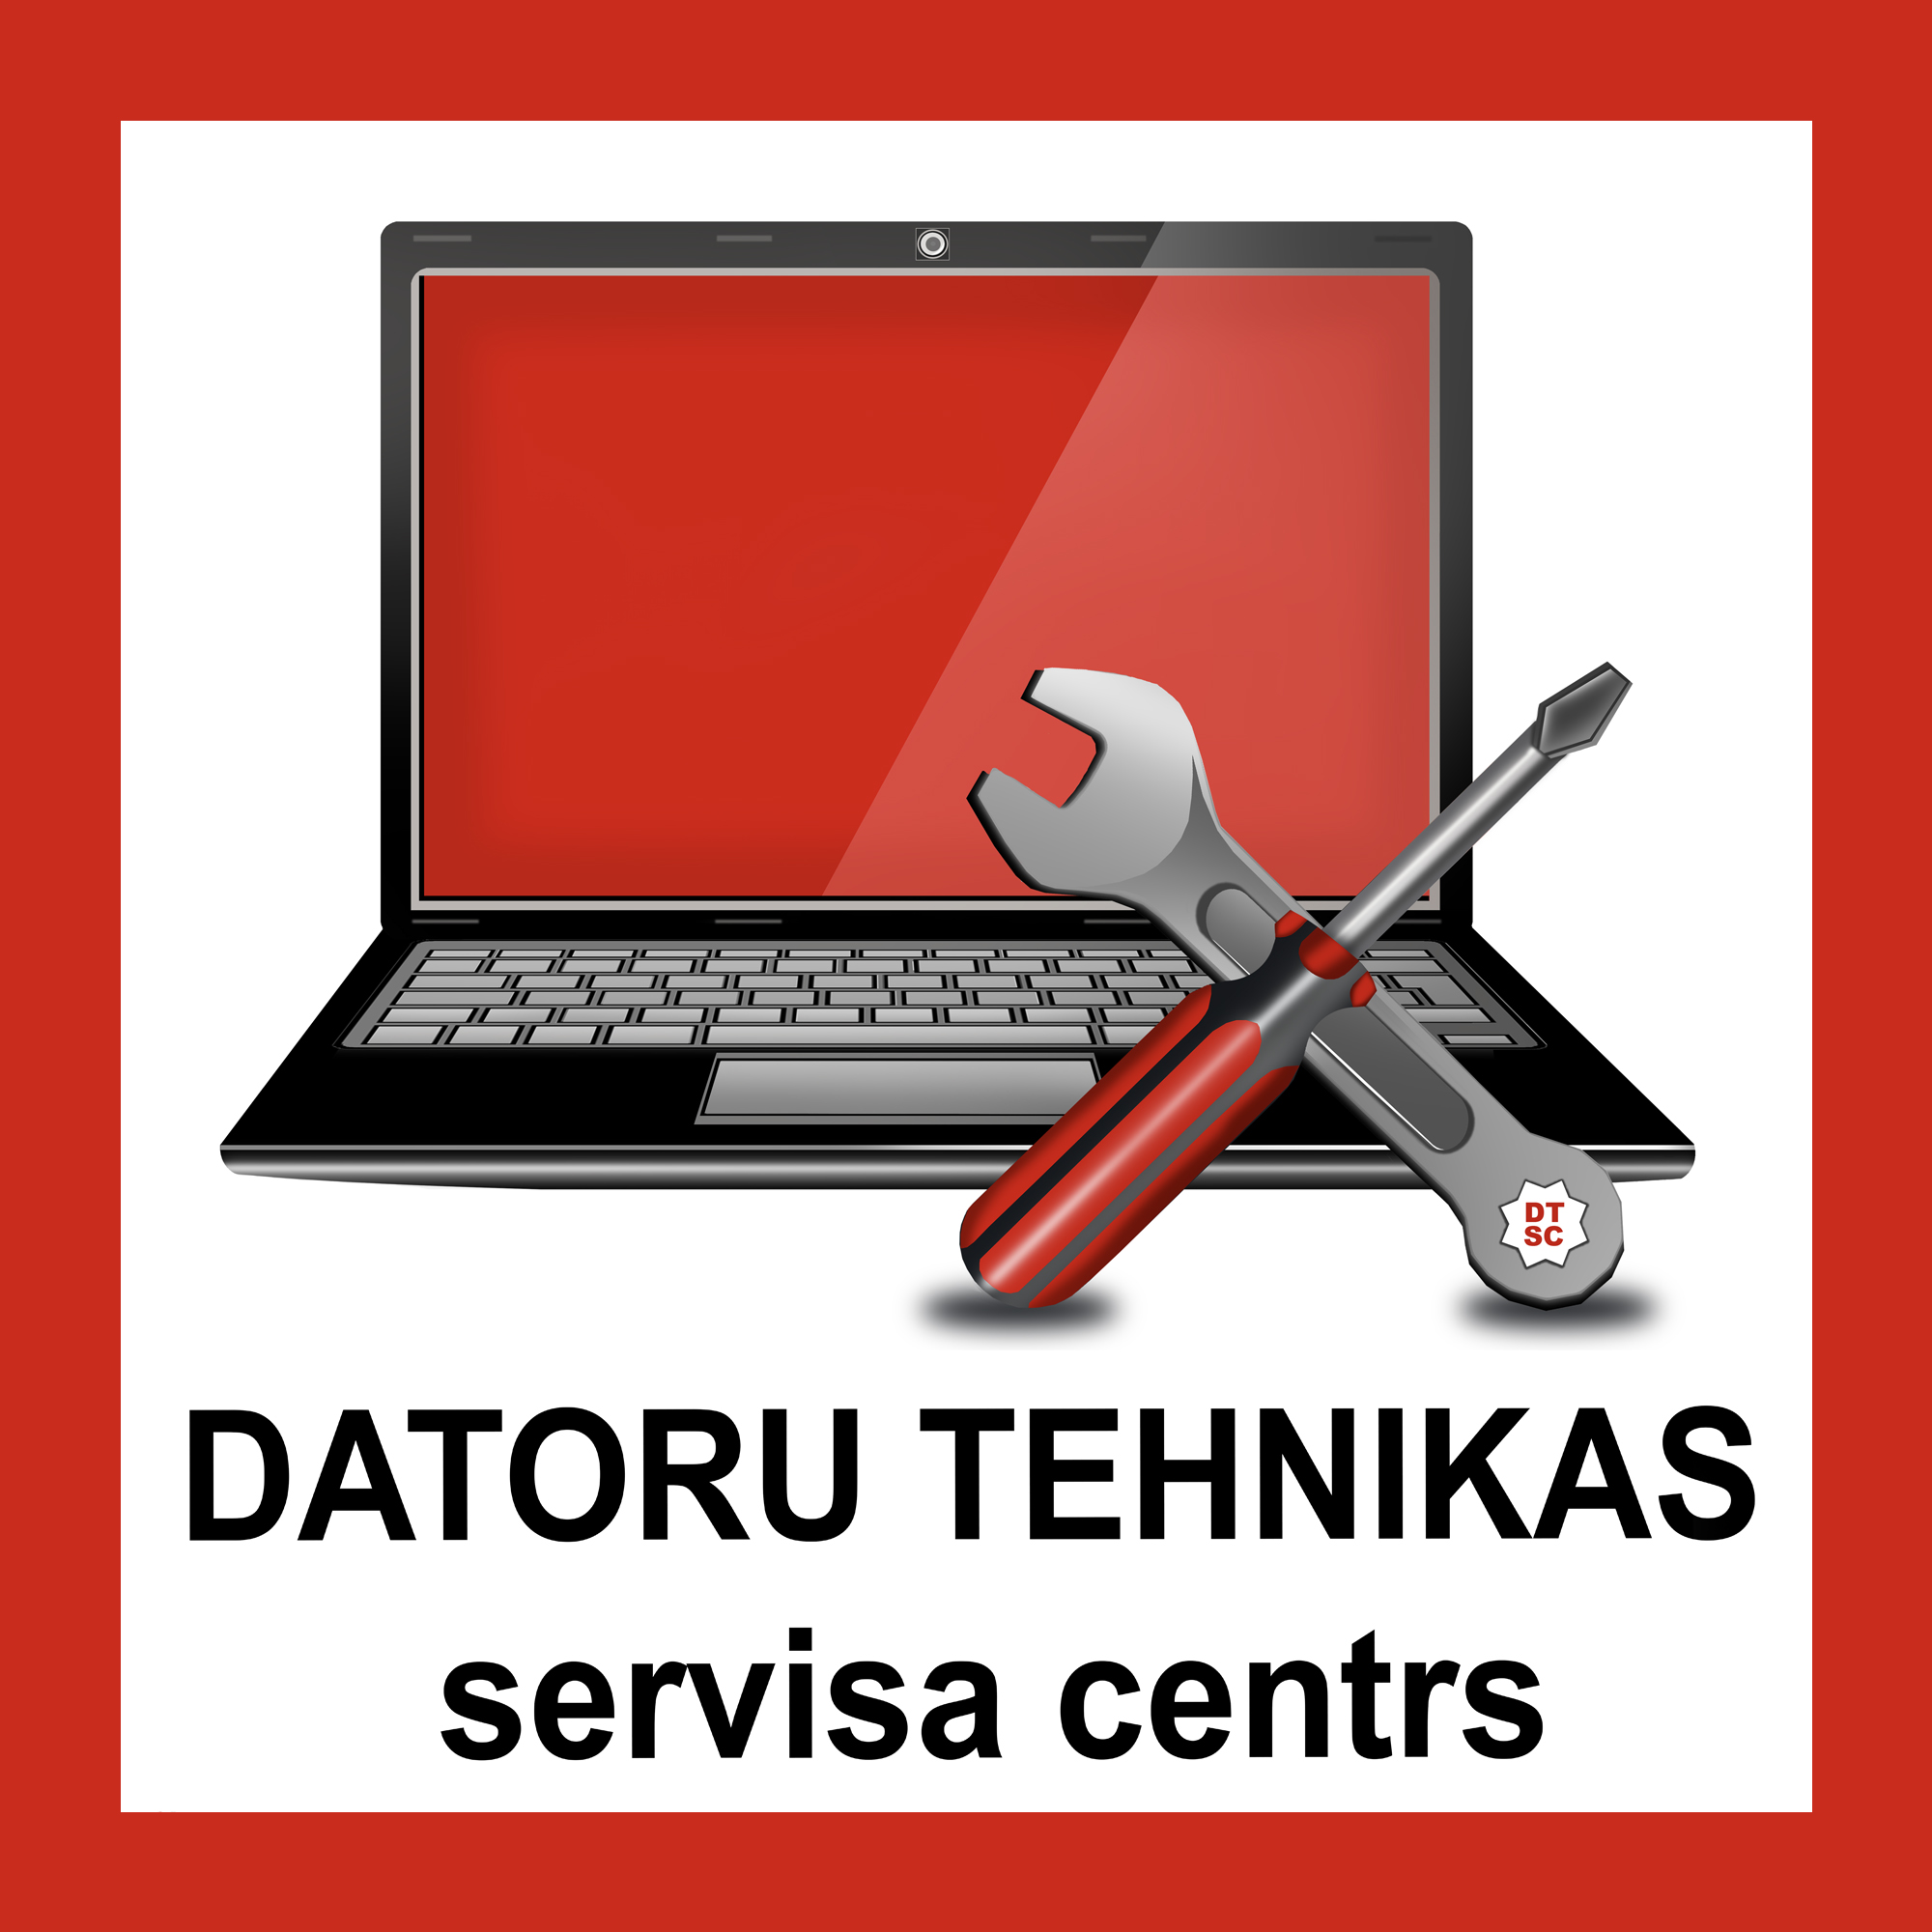 Datoru tehnikas servisa centrs DTSC